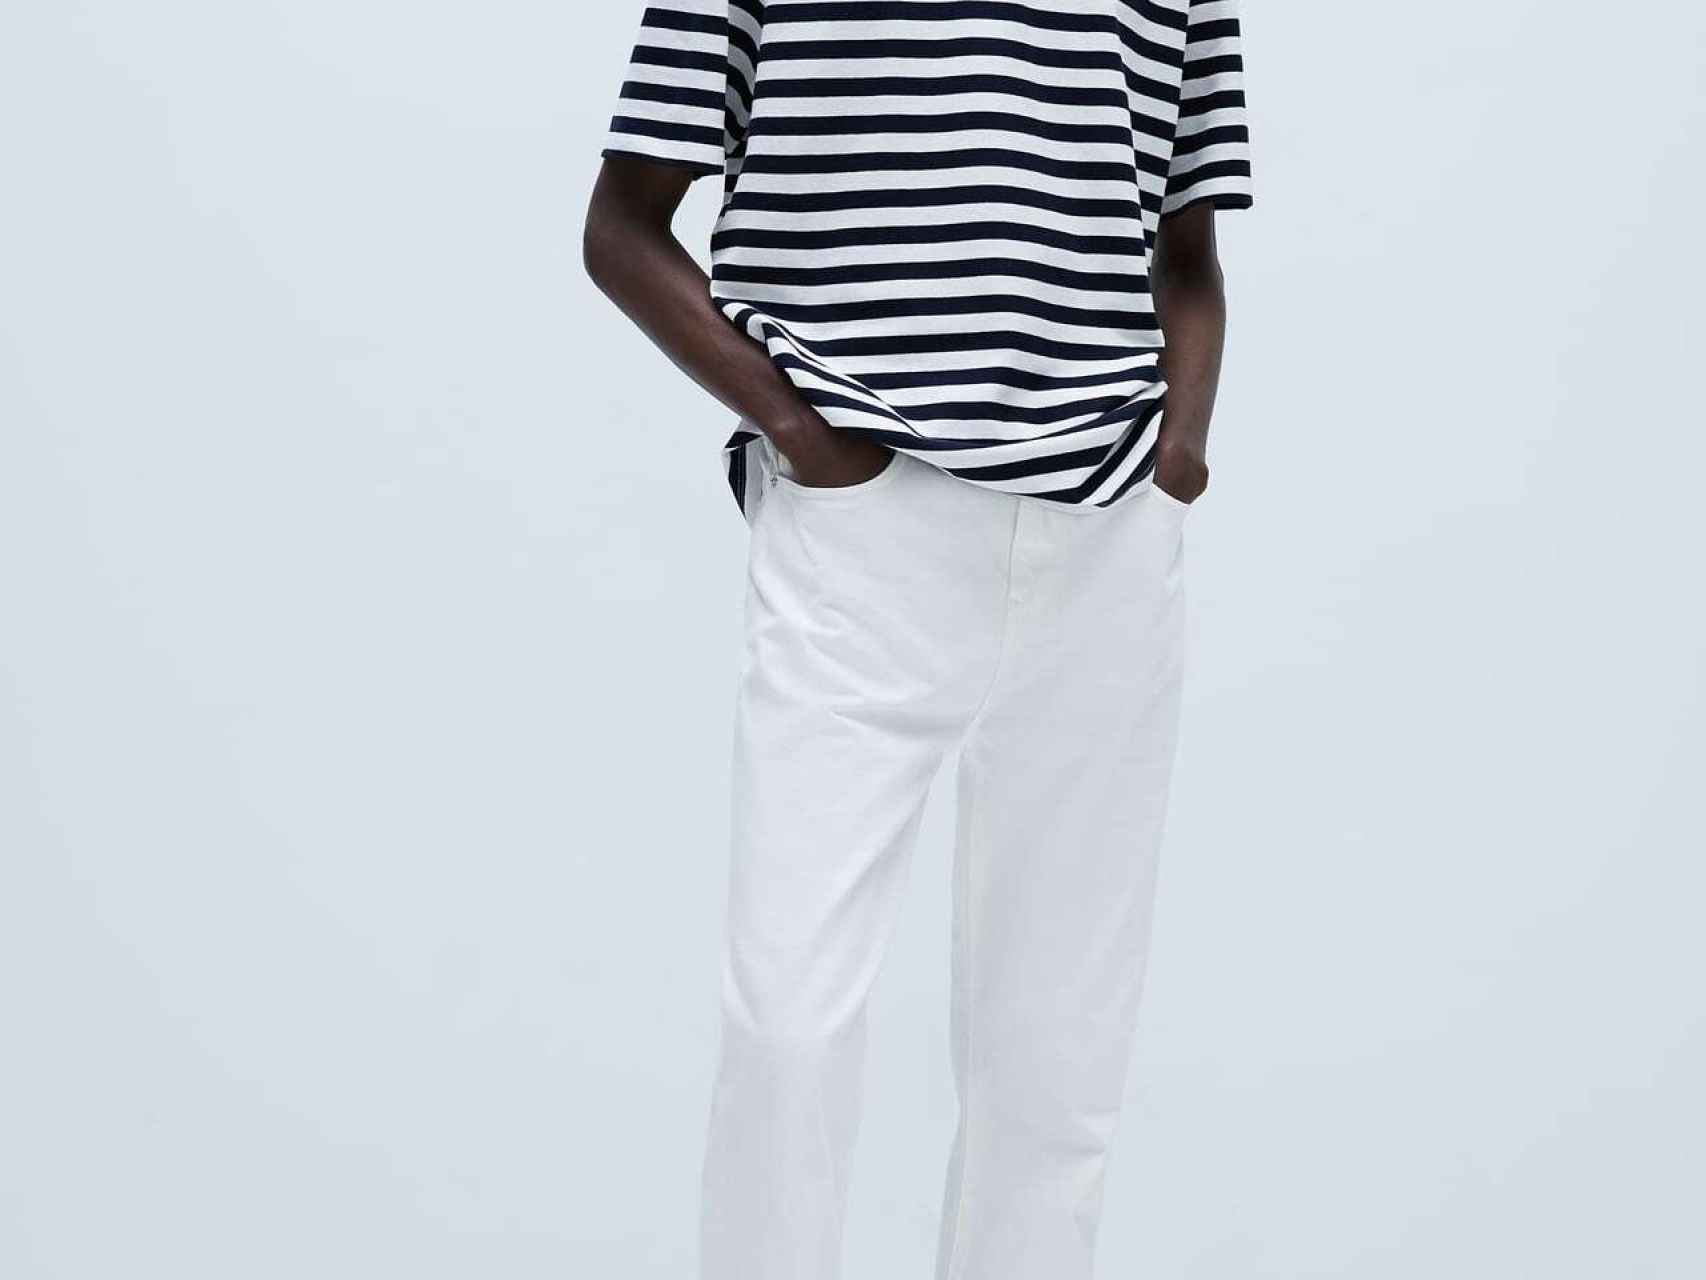 Modelo de Zara luciendo una camiseta a rayas.